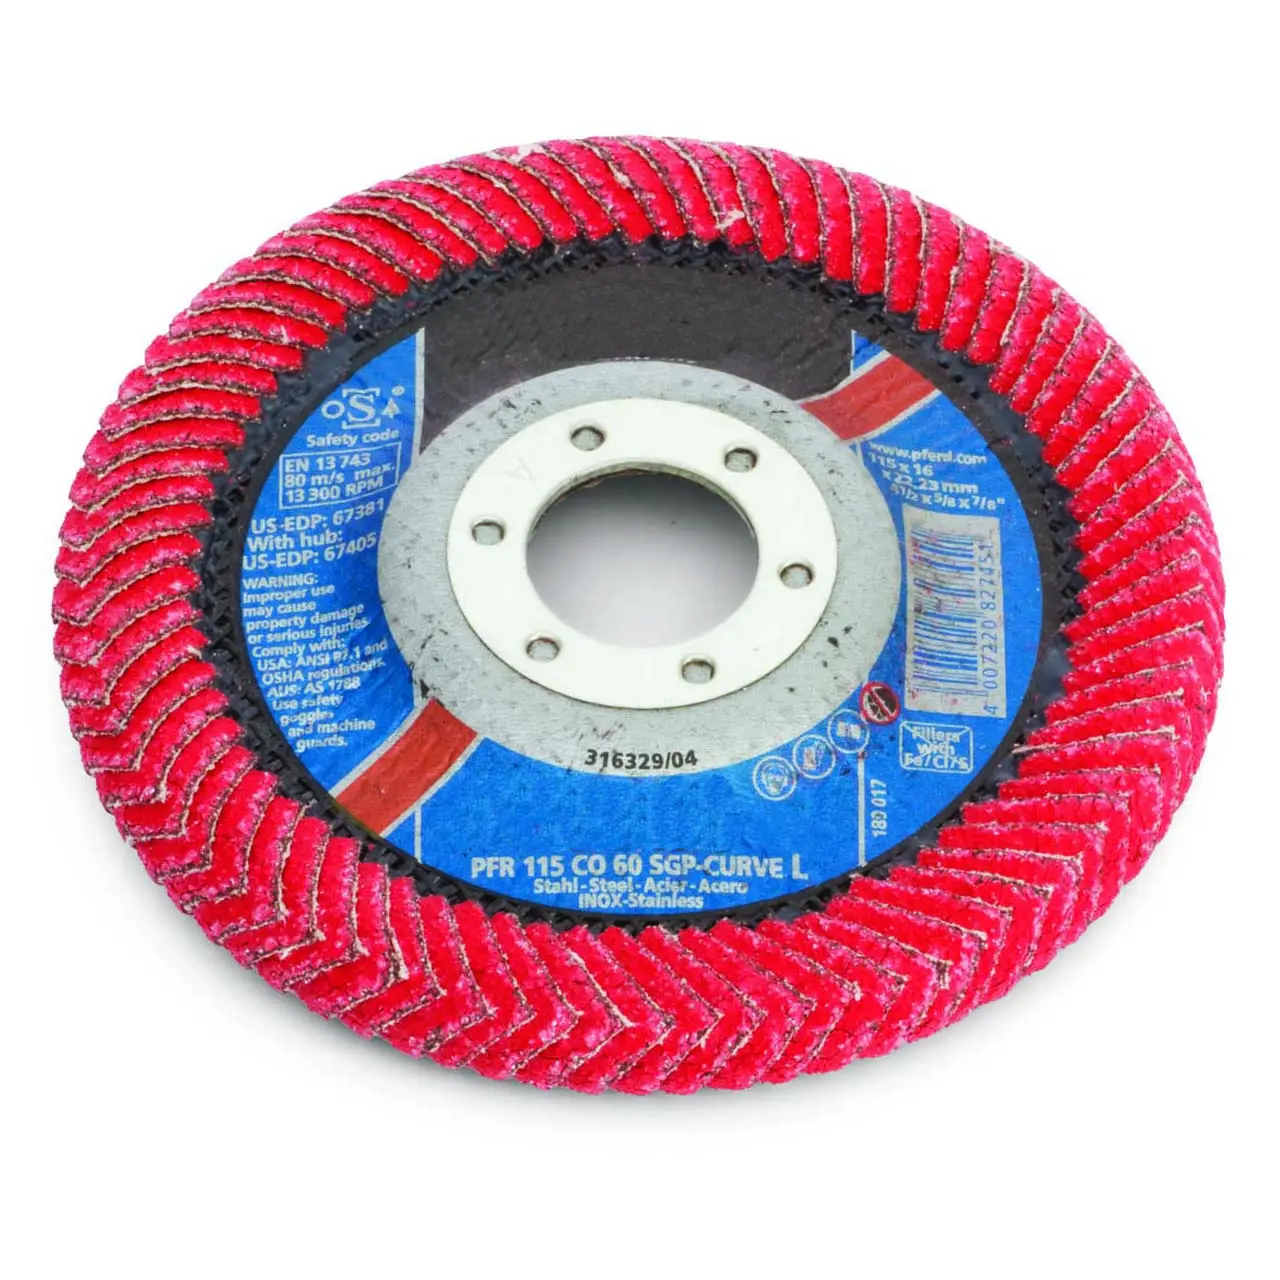 SATC-disco de aleta curvada de cerámica, disco de molienda para esquinero, 115mm